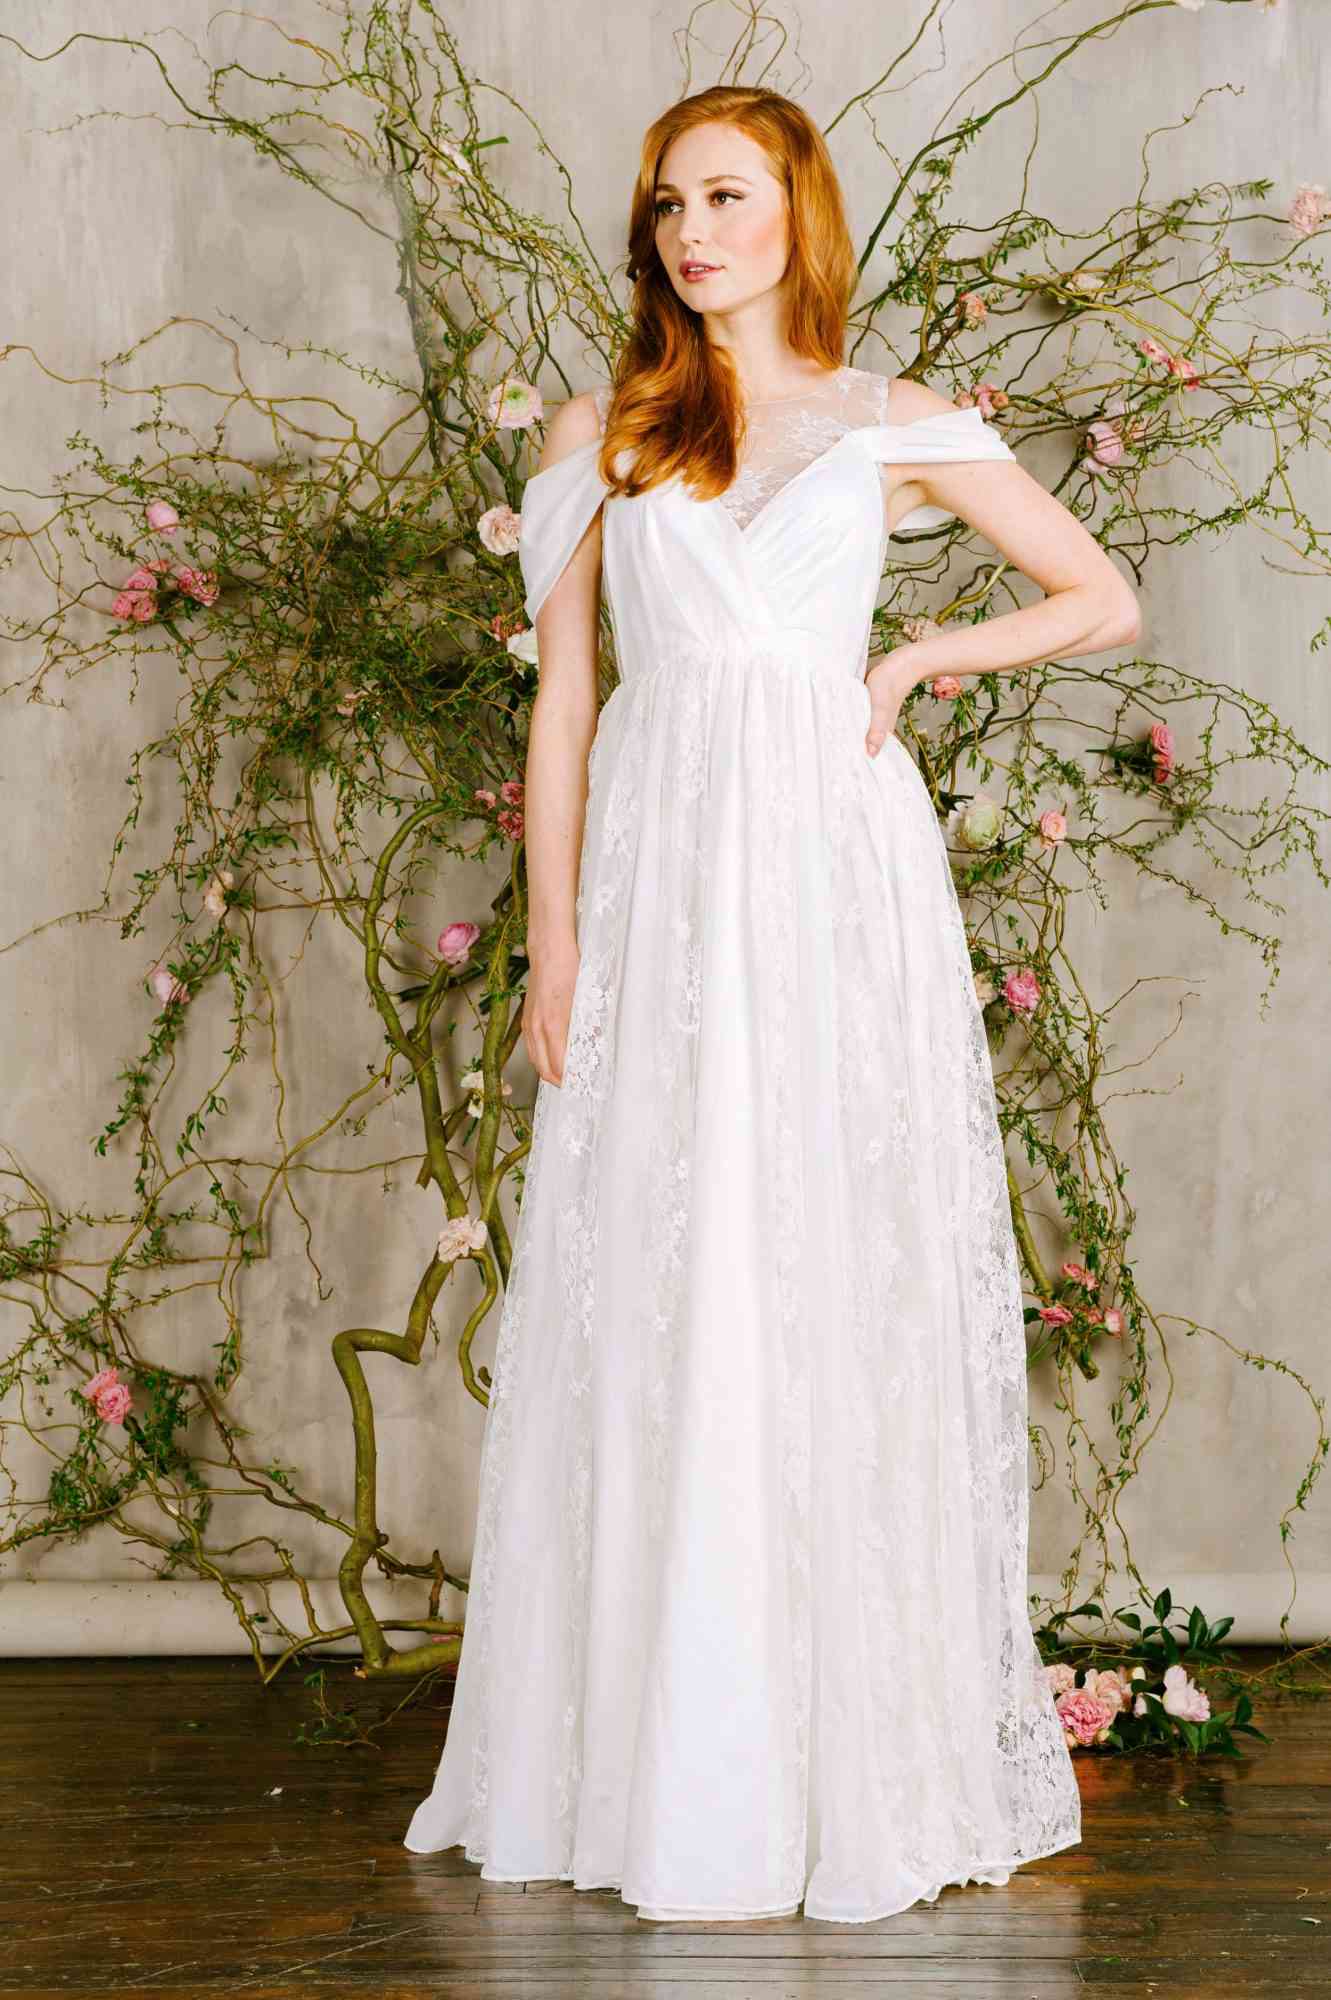 Get the Look: Stevie Nicks-Inspired Wedding Dress